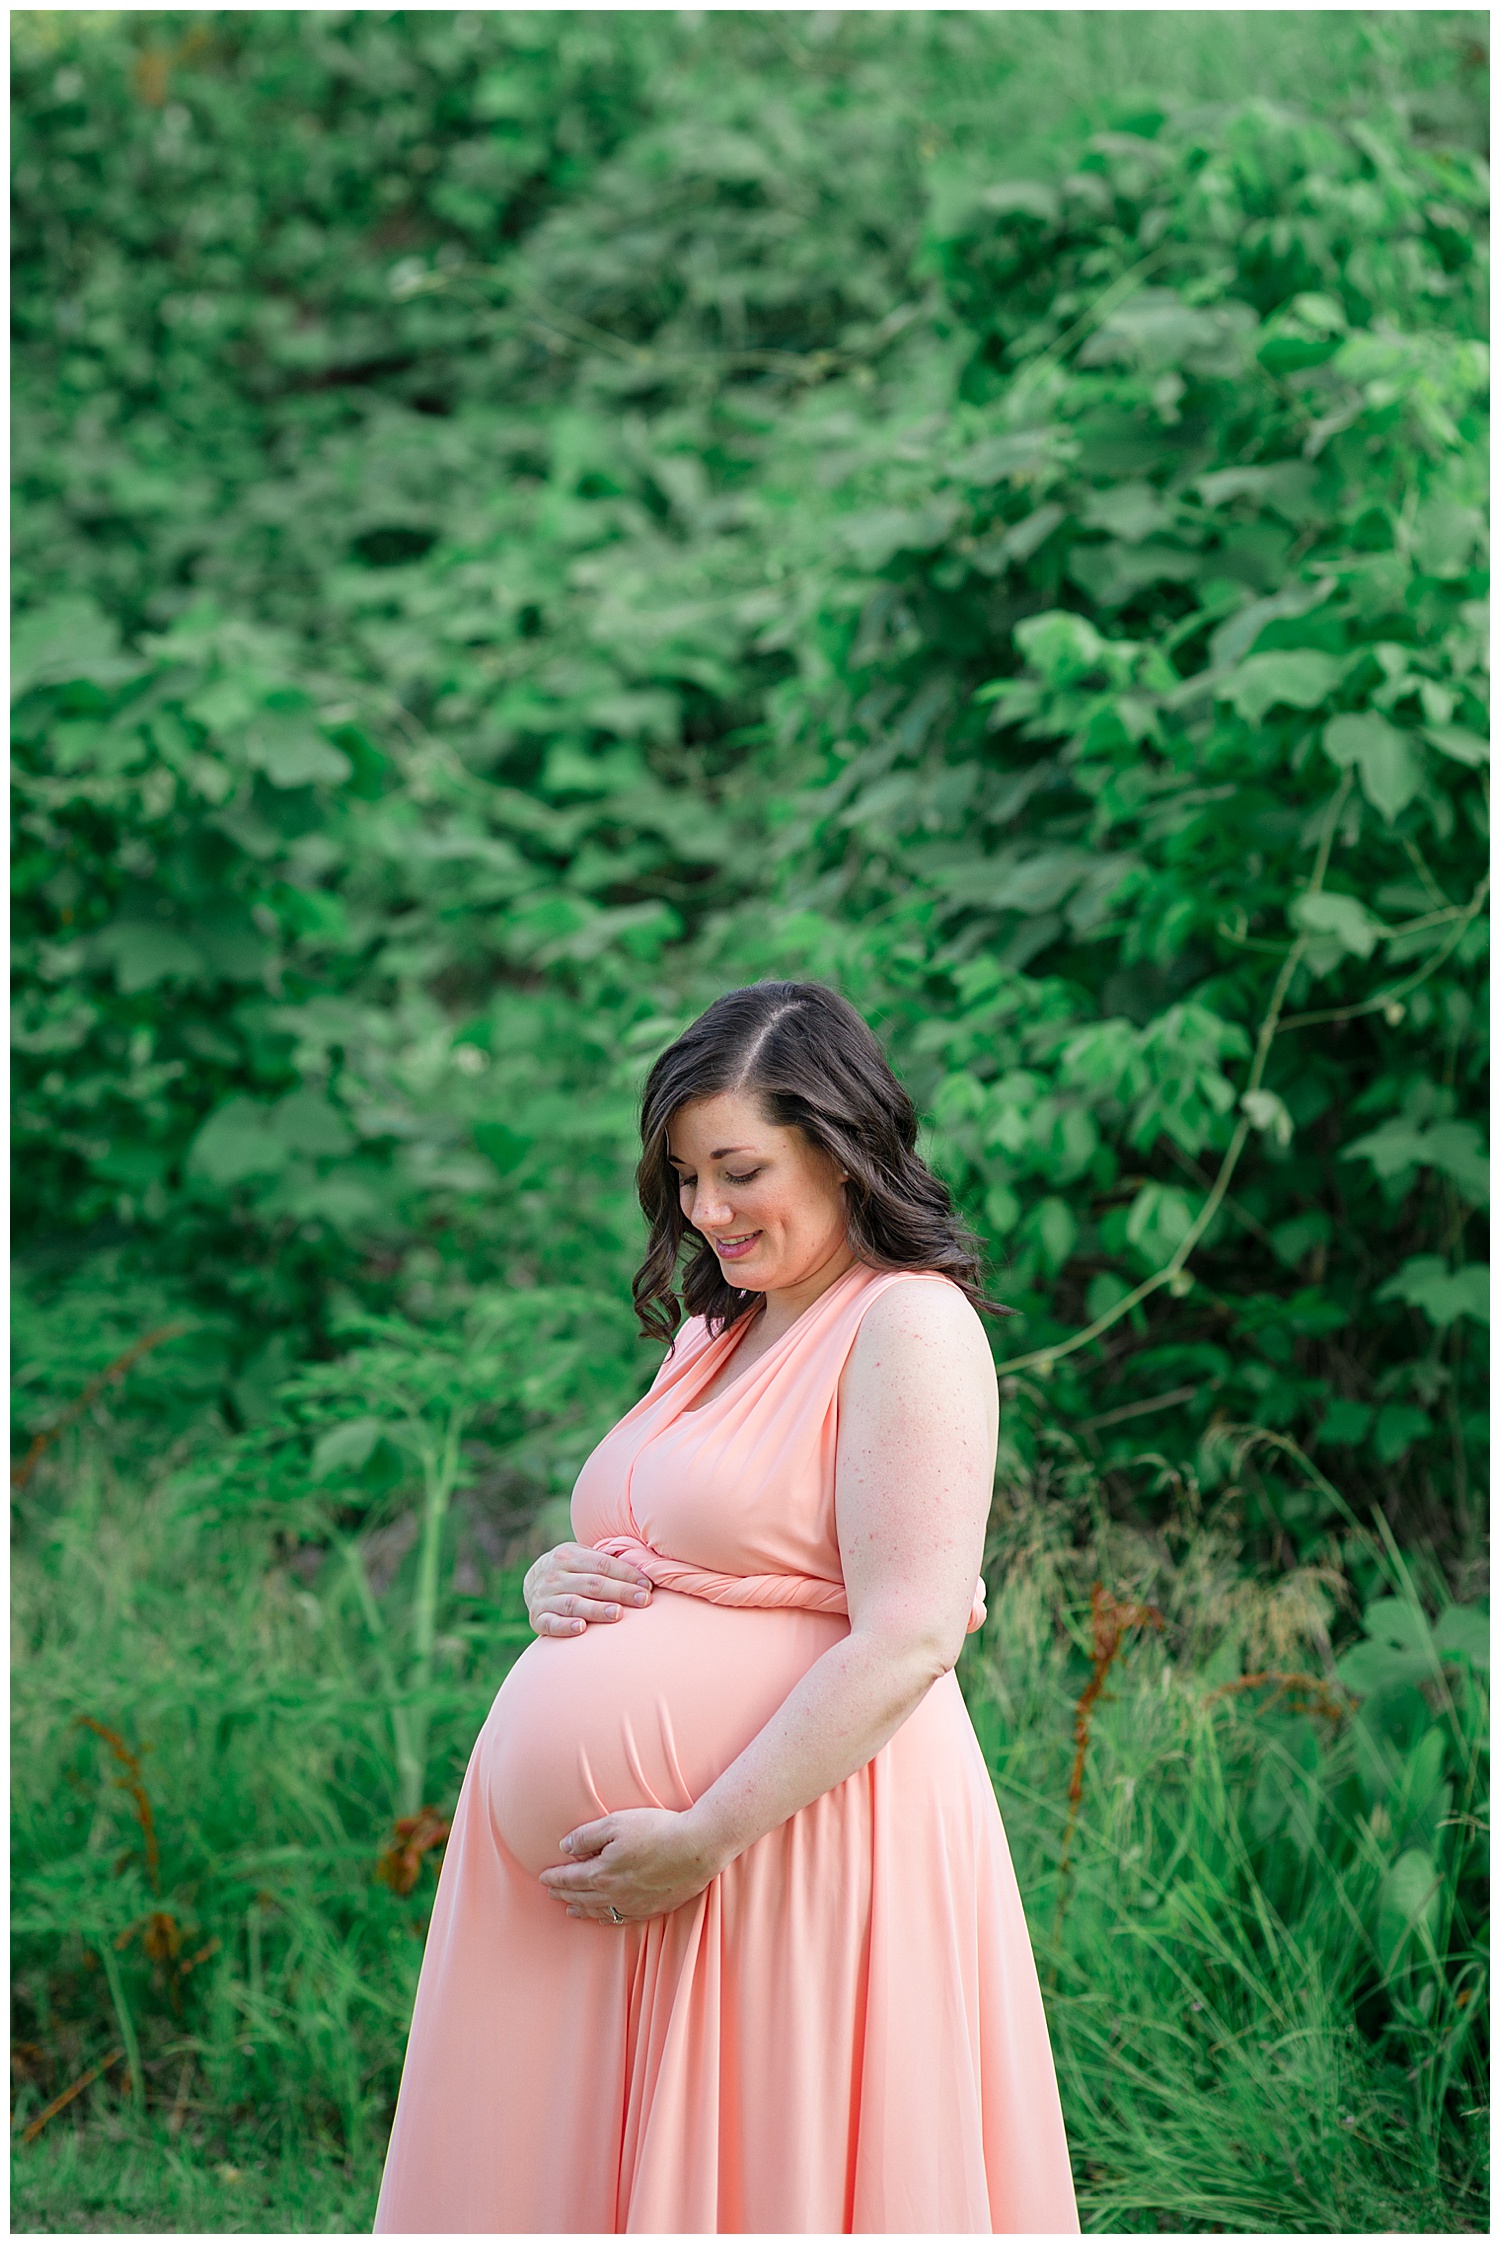 Meet the Bump | Stephanie H. | Columbia, SC | Maternity Session | 2019 ...